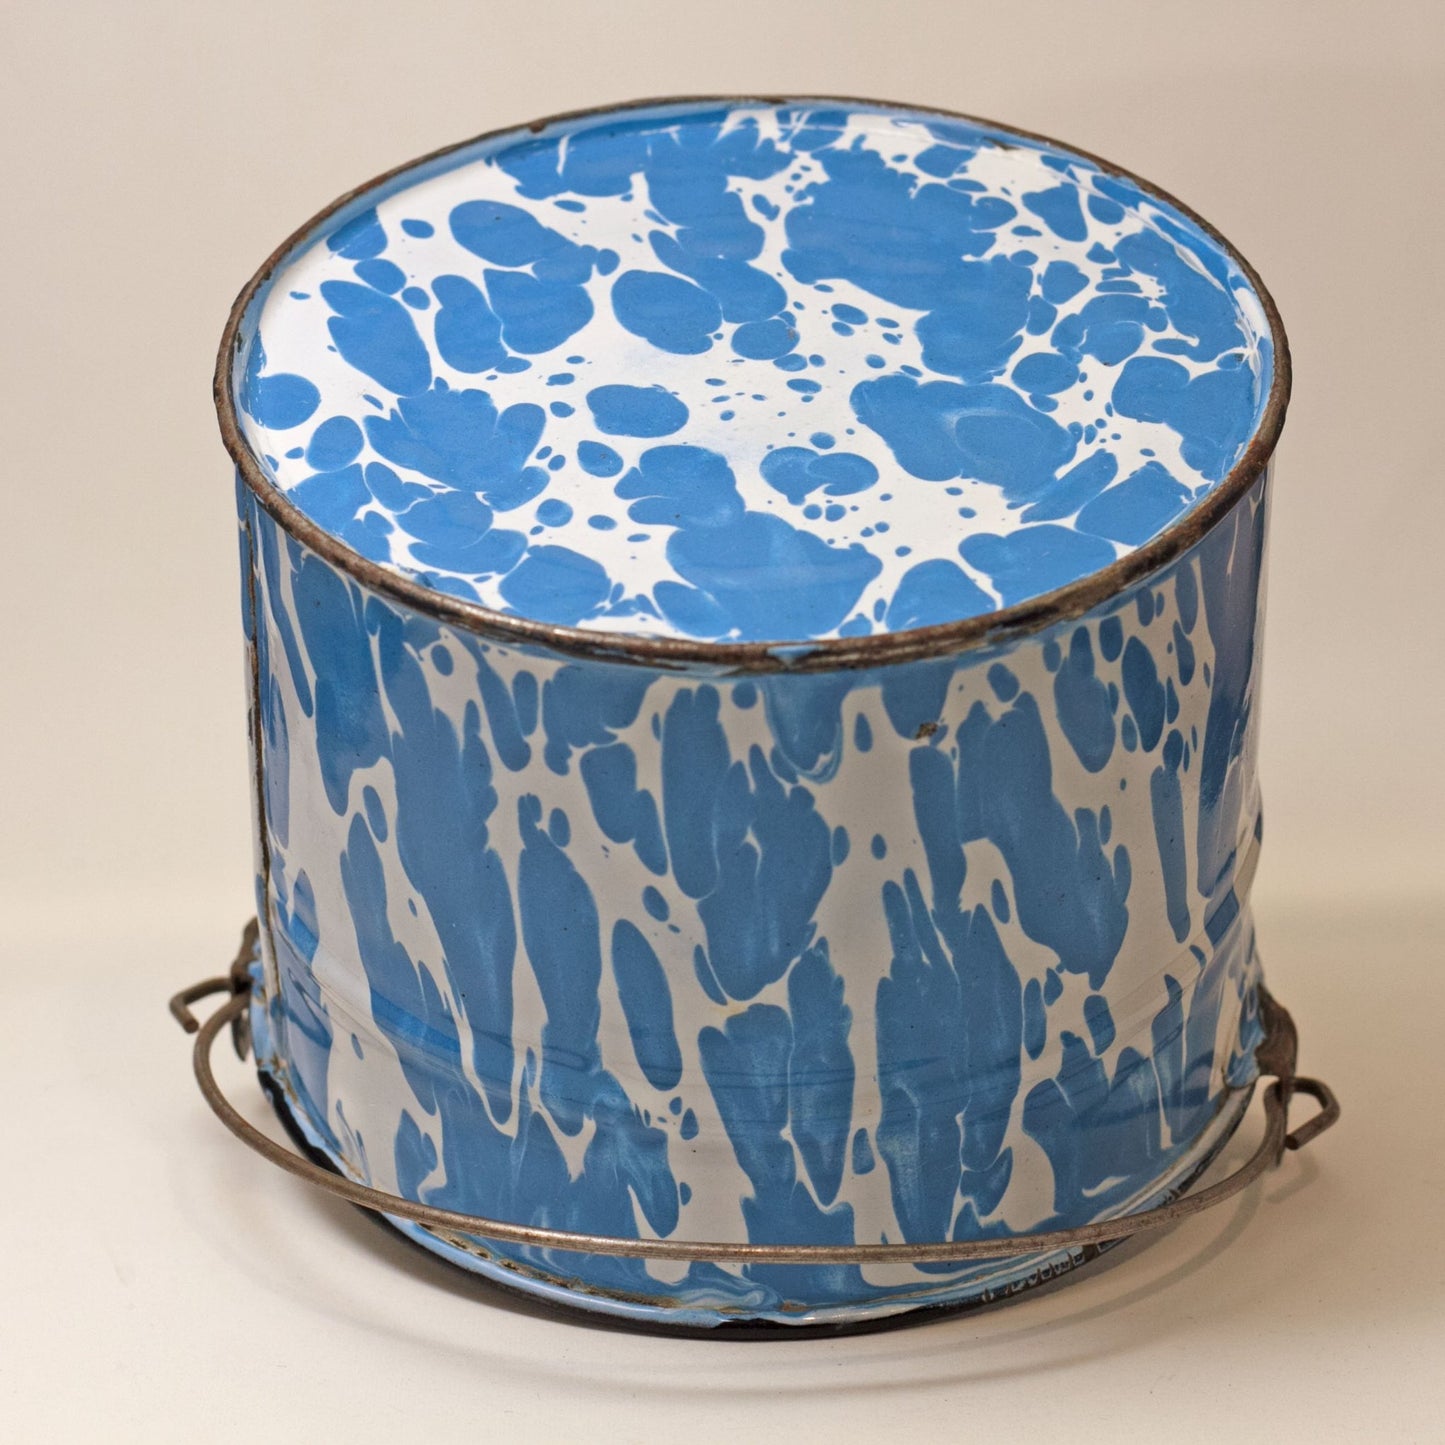 WATER BUCKET with Bright Blue and White Swirl Black Trim Circa 1880 - 1920